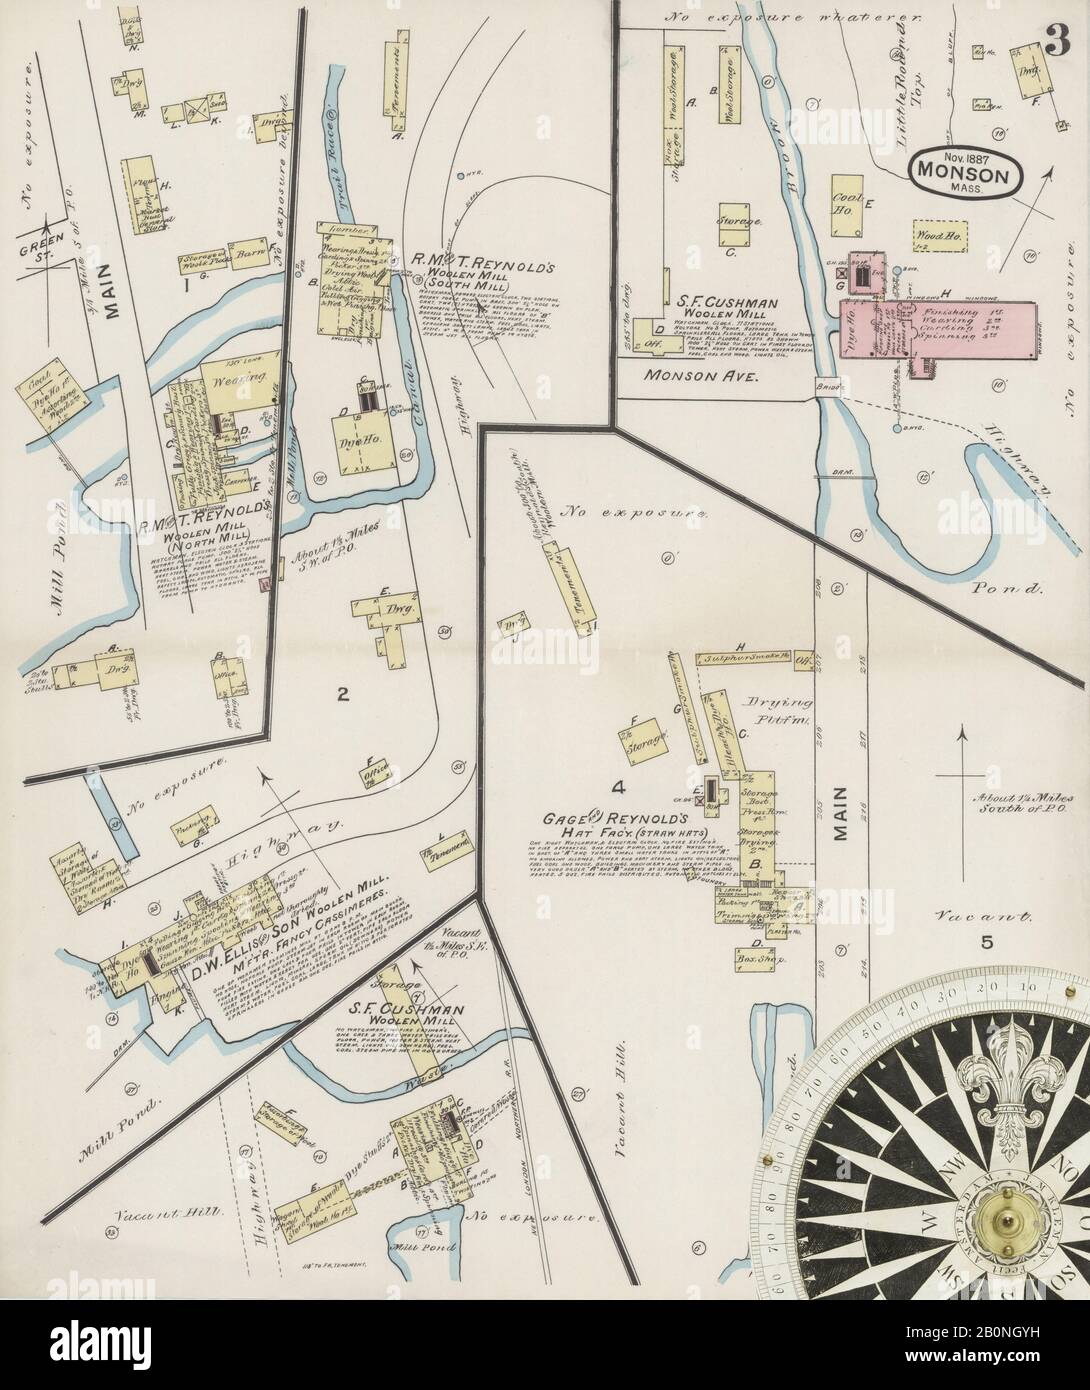 Bild 3 von Sanborn Fire Insurance Map aus Monson, Hampden County, Massachusetts. Nov. 3 Blatt(e), Amerika, Straßenkarte mit einem Kompass Aus Dem 19. Jahrhundert Stockfoto